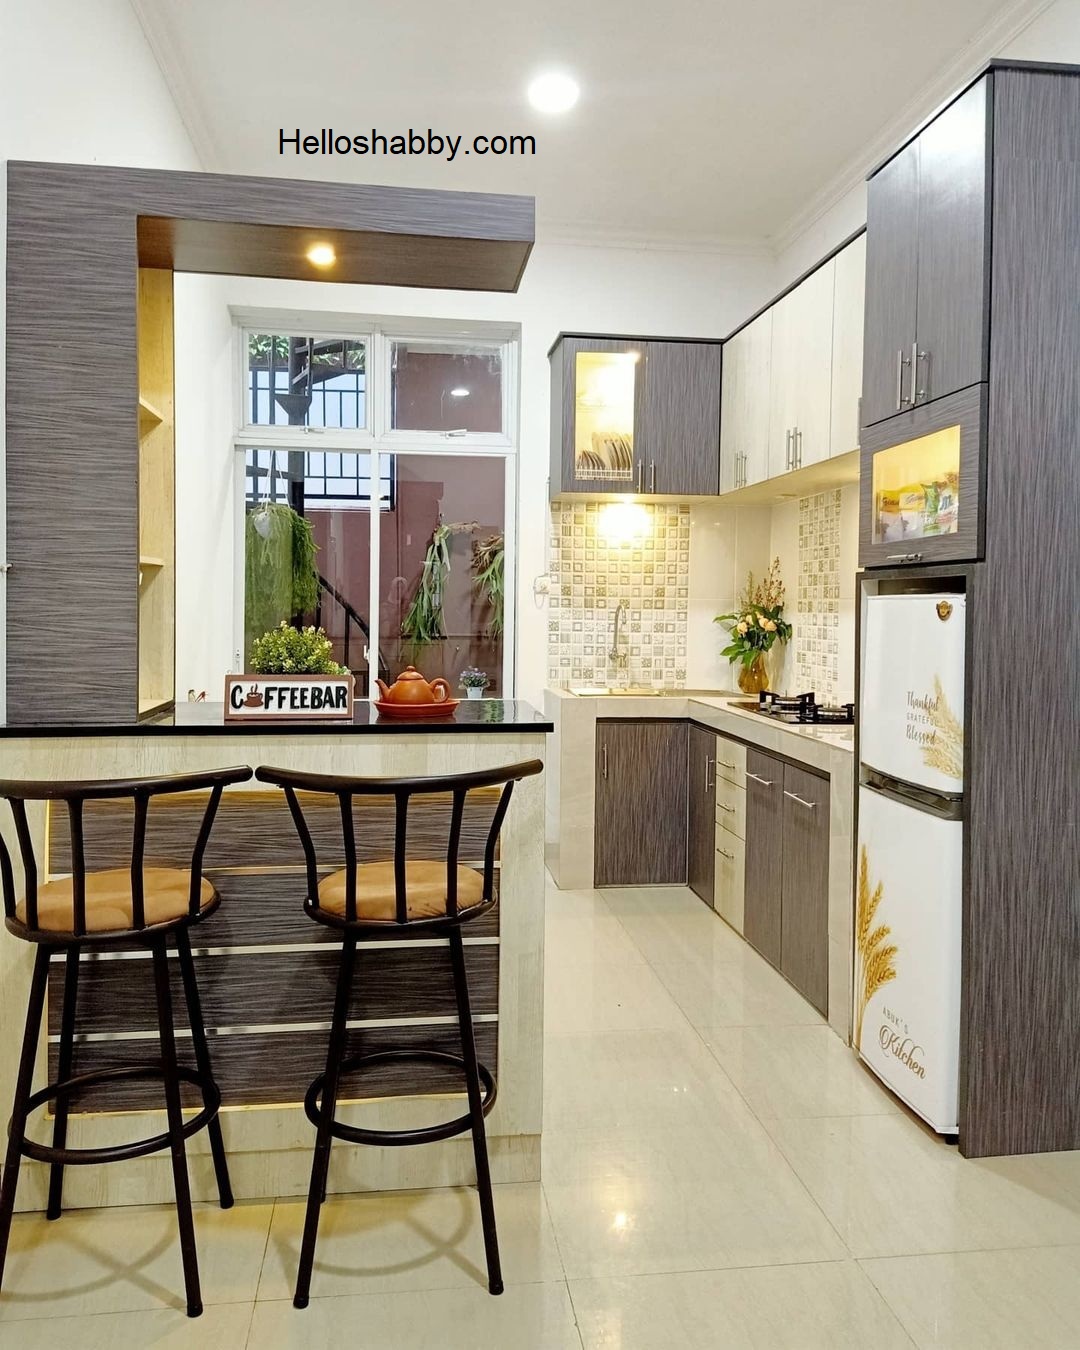 7 Desain Dapur Kecil Minimalis Sederhana Terbaru HelloShabbycom Interior And Exterior Solutions